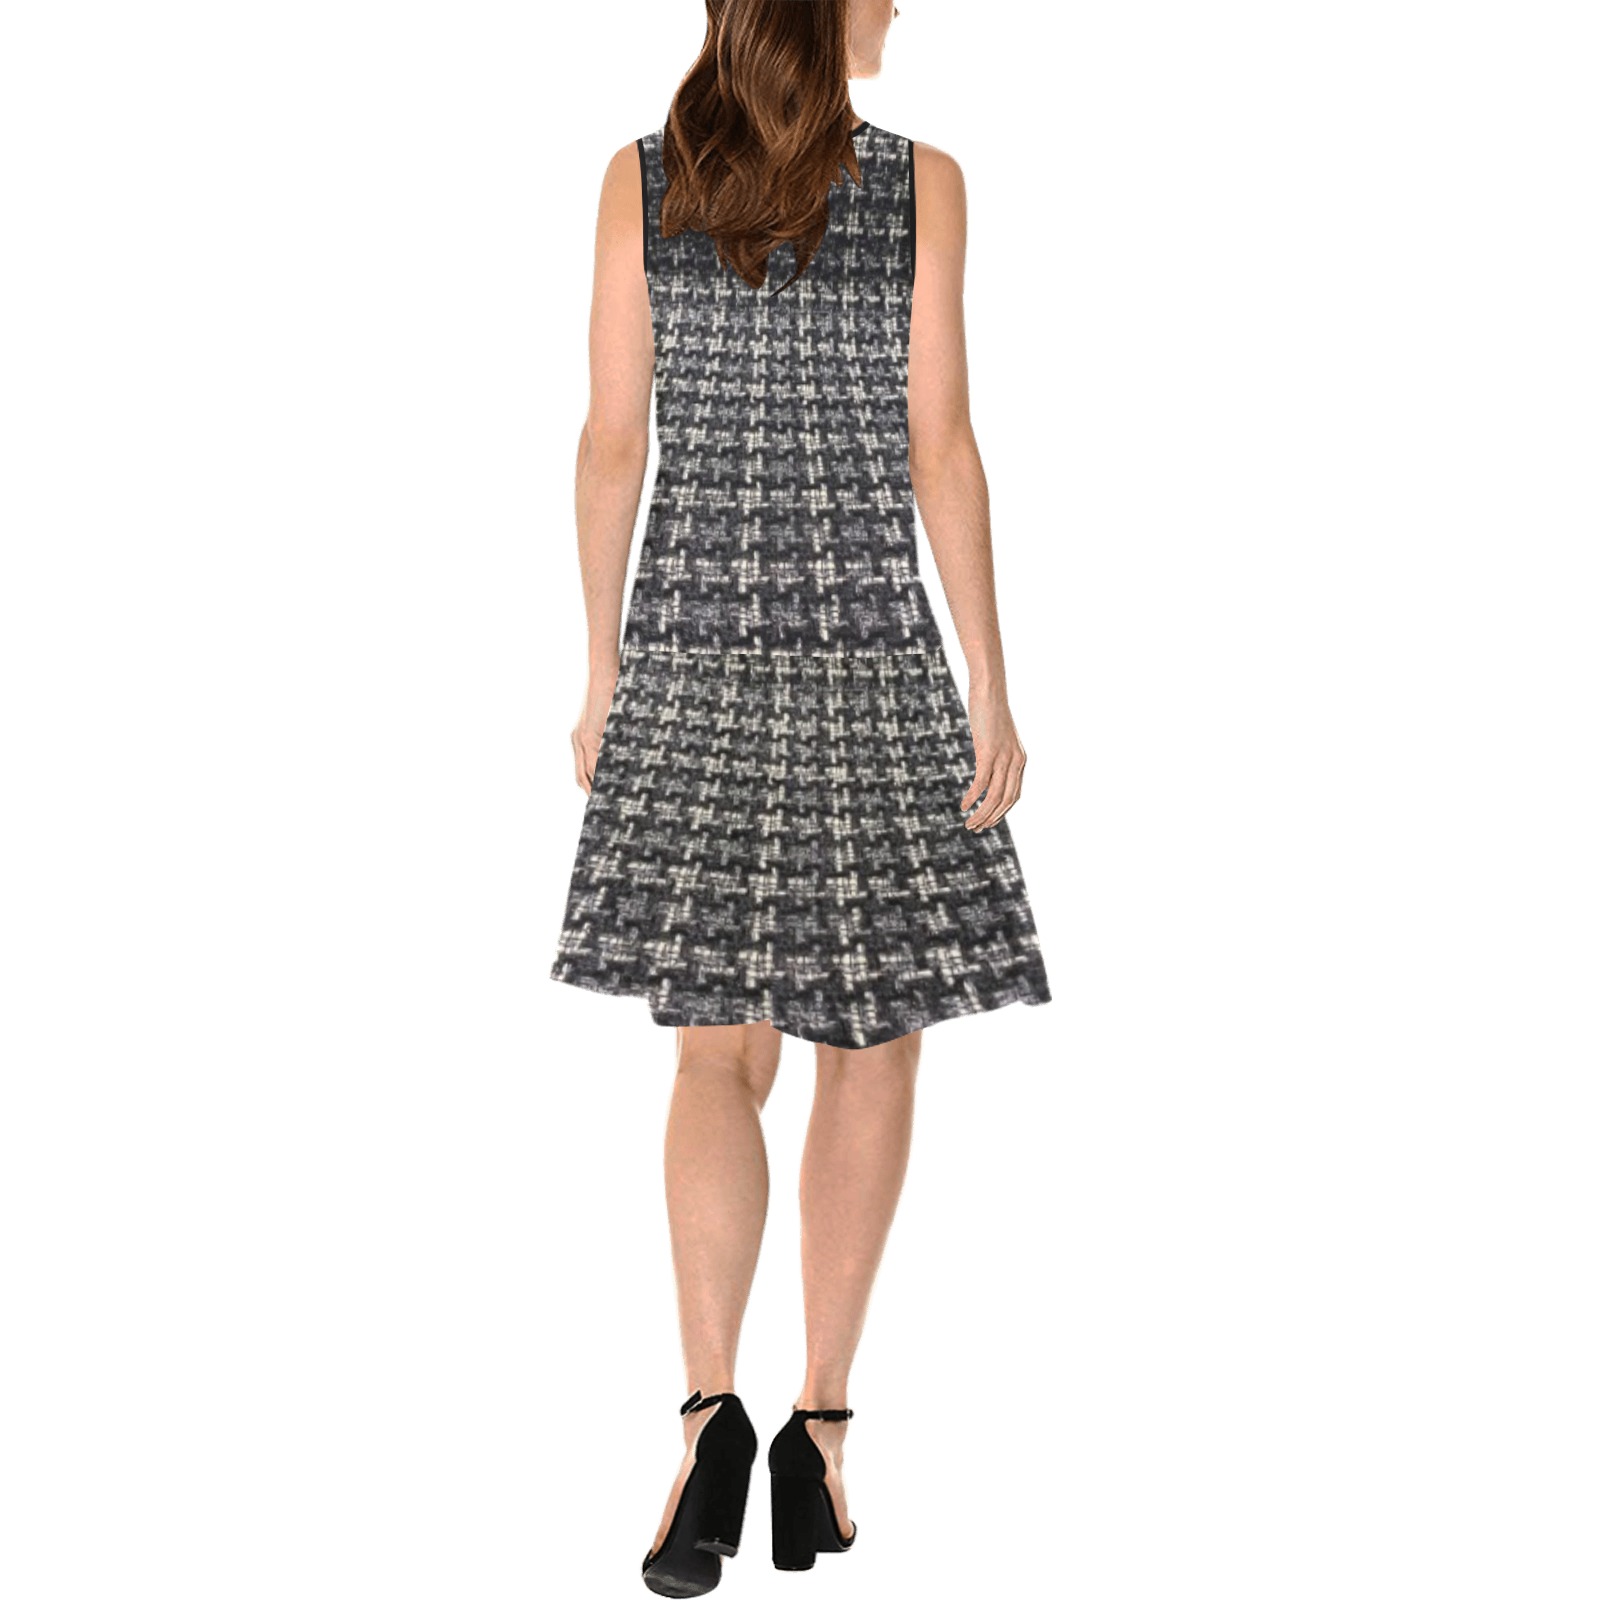 DIONIO Clothing - Ladies Checkered Sleeveless Splicing Shift Dress (Black & Gray) Sleeveless Splicing Shift Dress(Model D17)